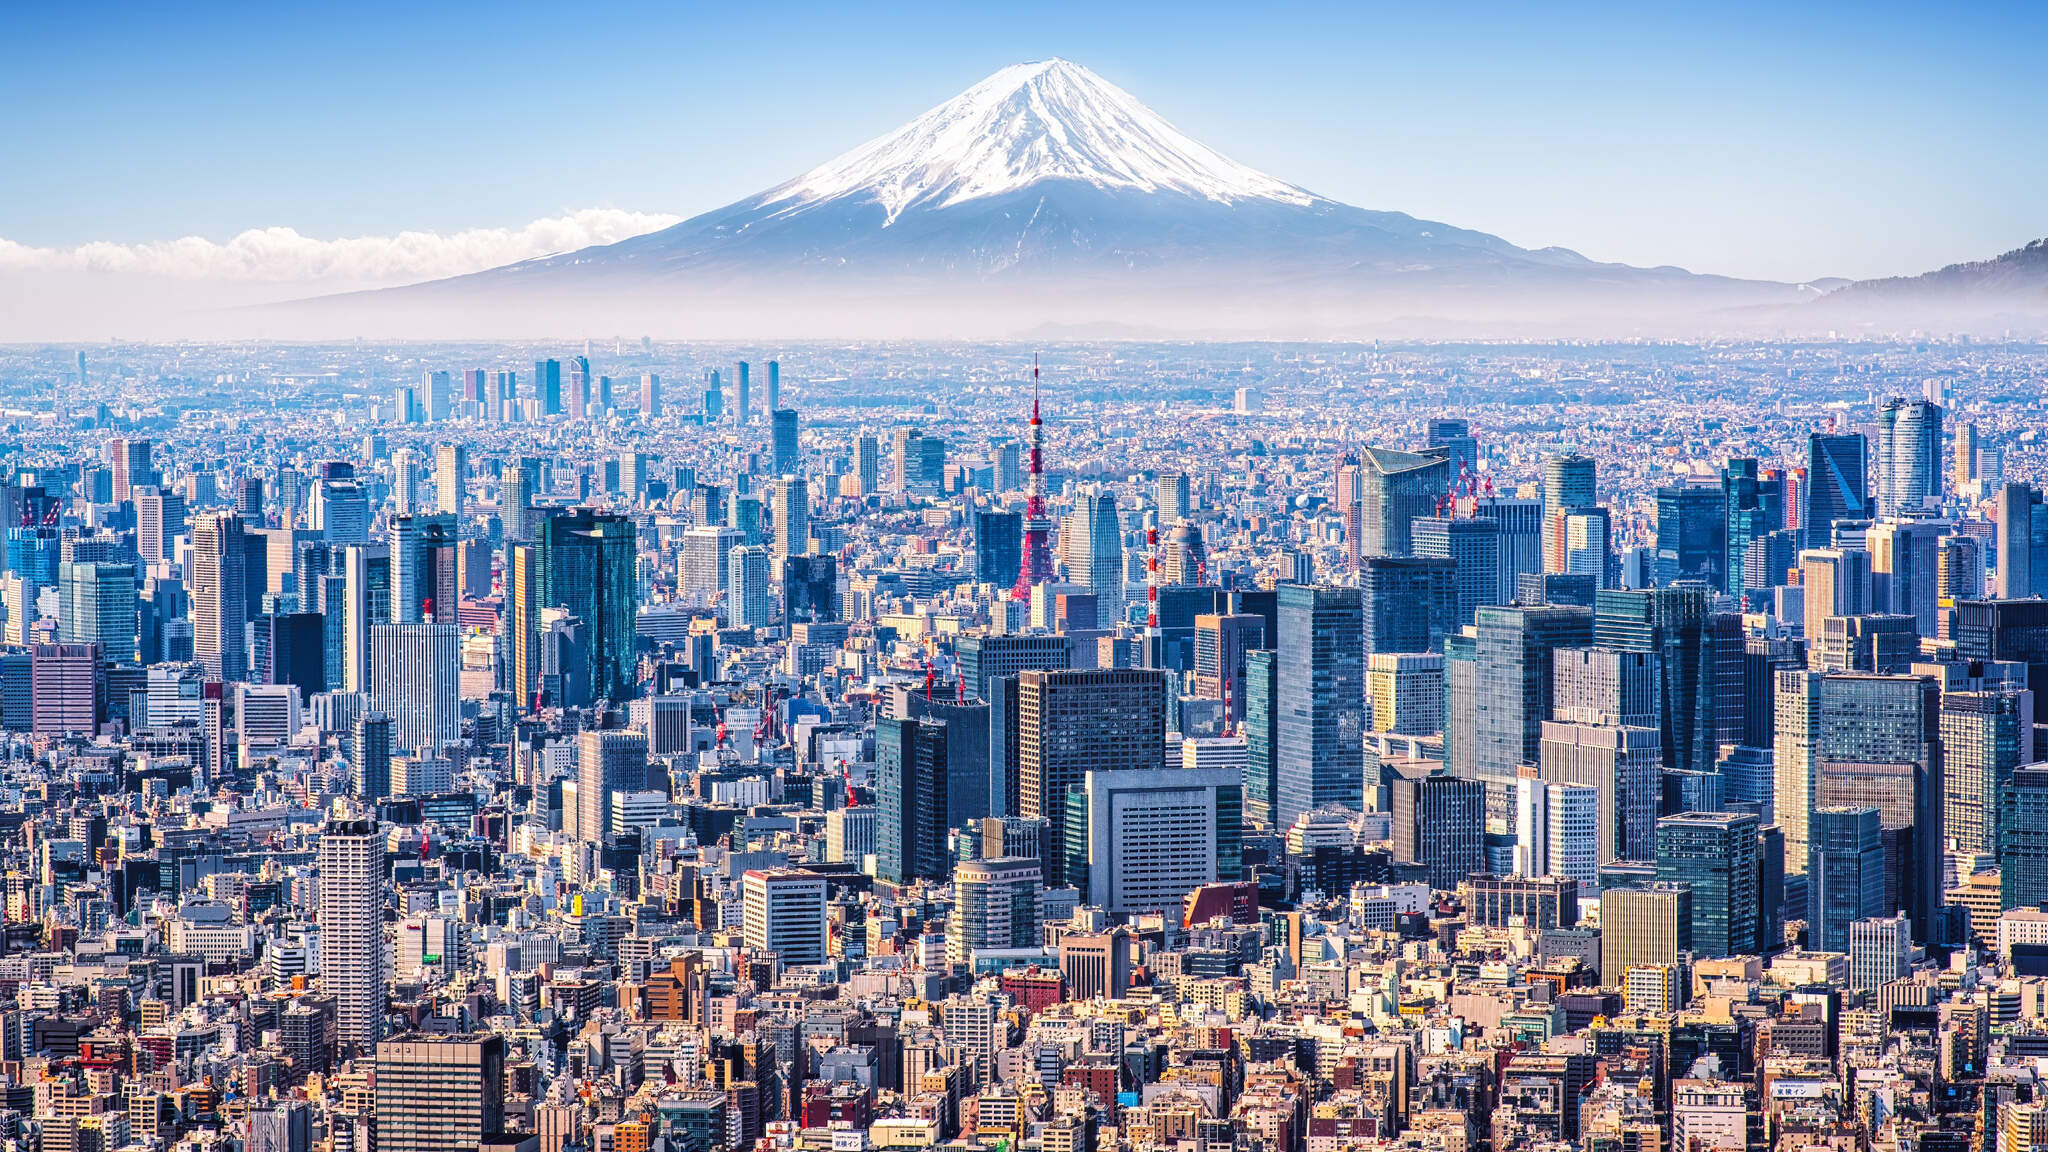 Tokyo, the economic metropolis at the foot of Mount Fuji.